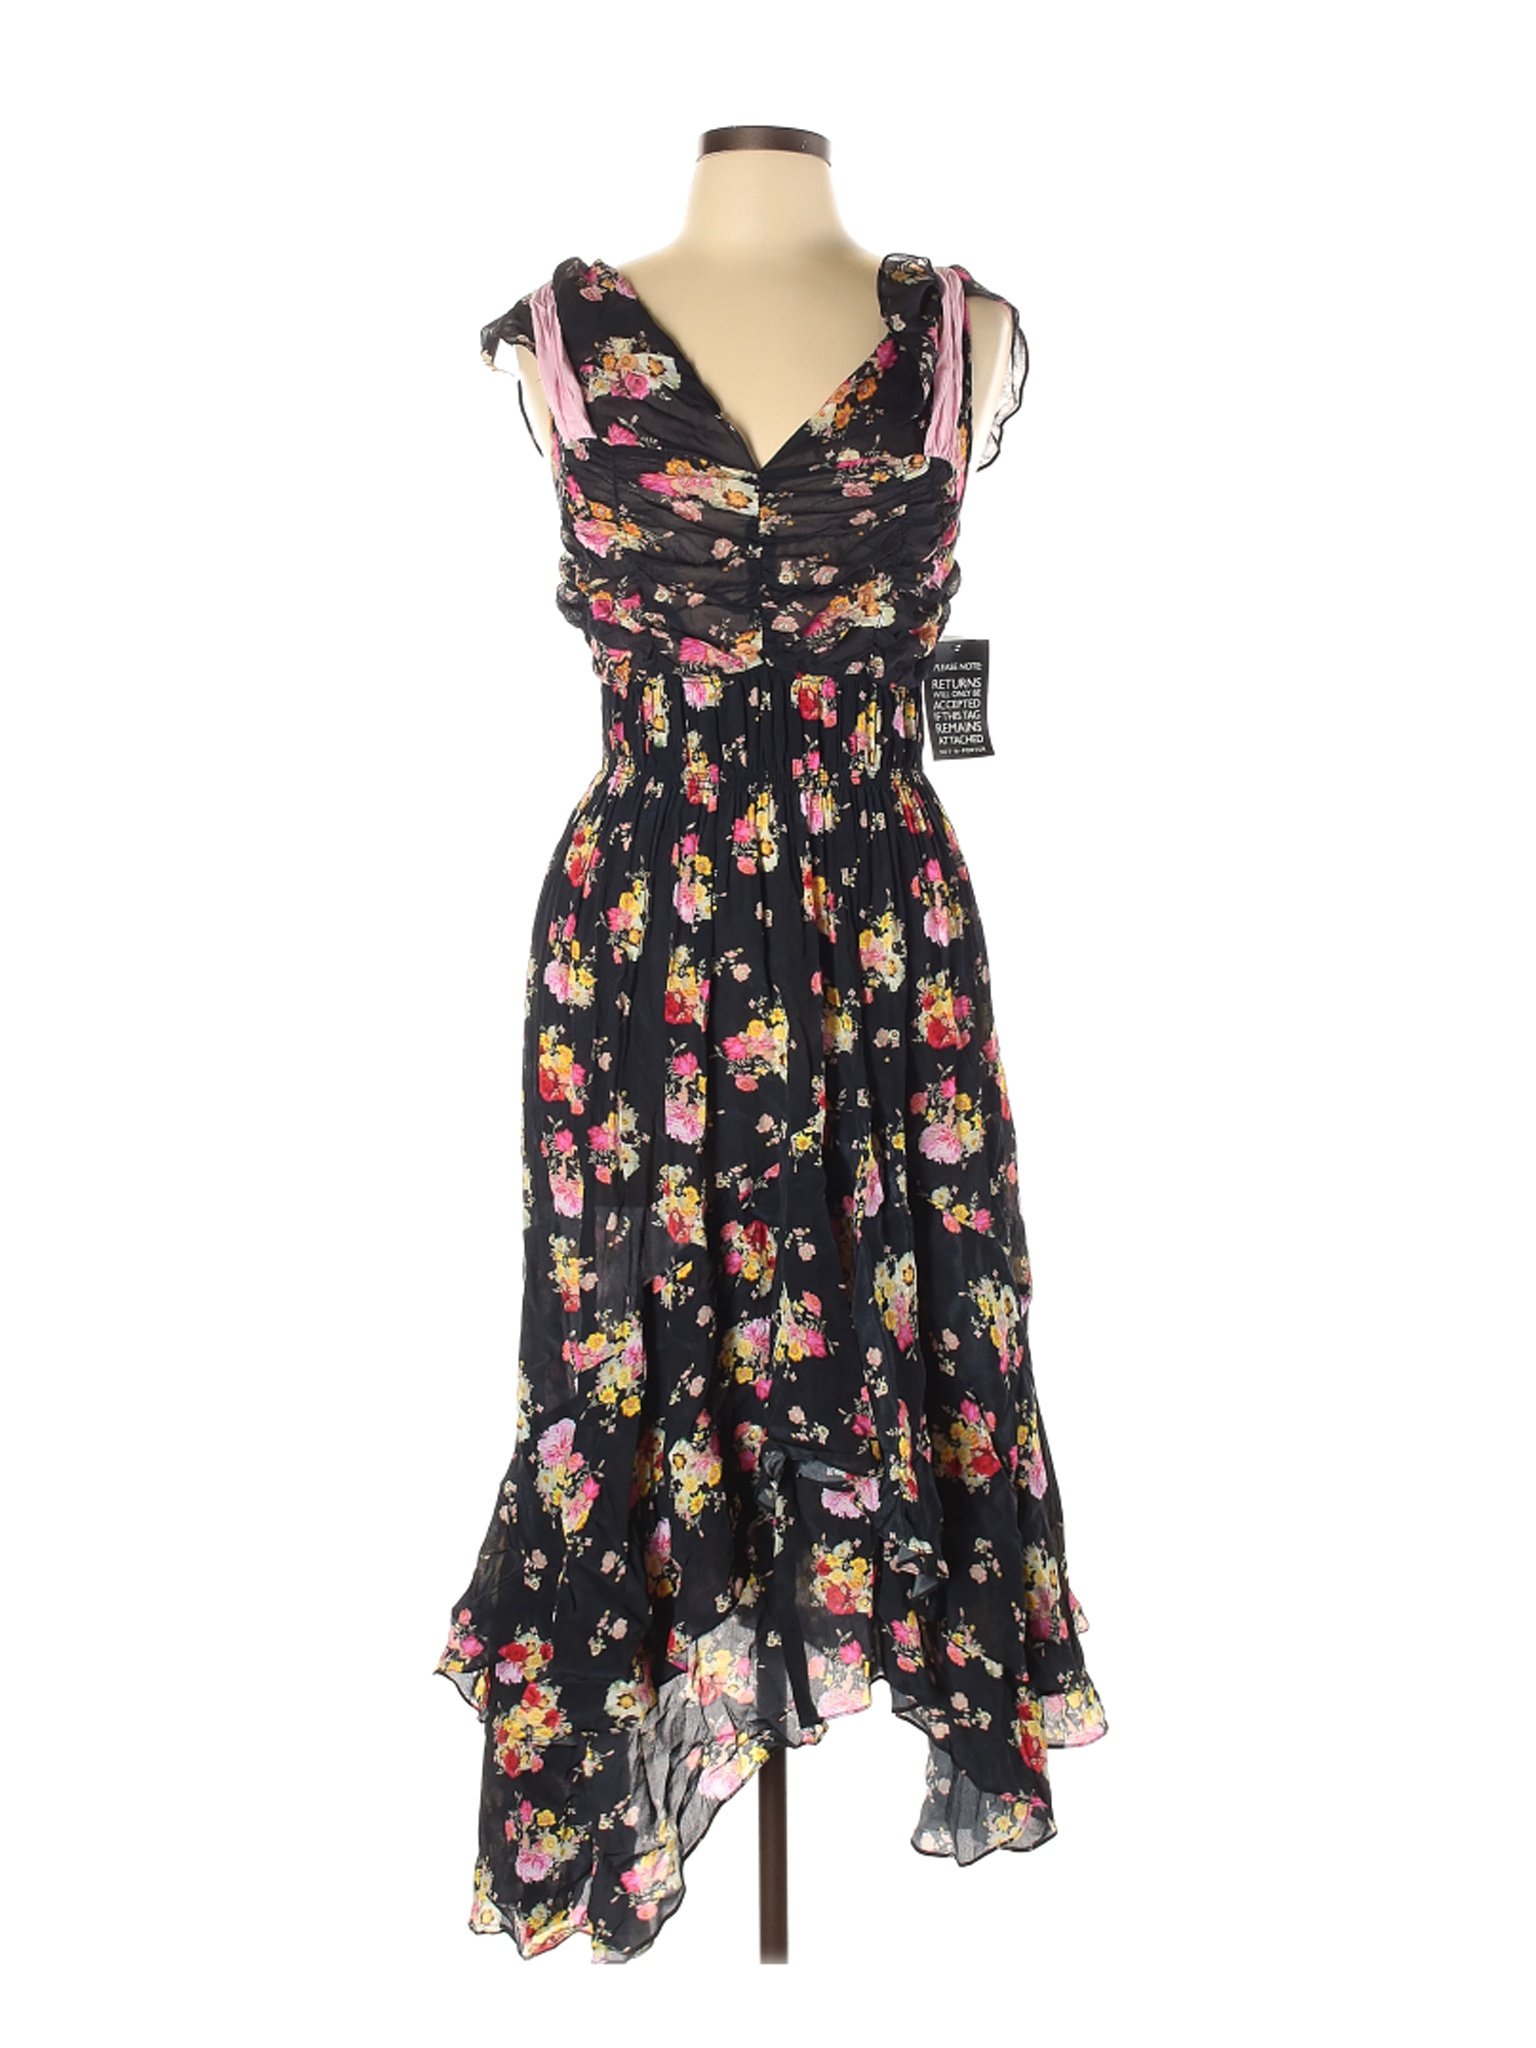 Preen Line 100% Viscose Floral Black Casual Dress Size L - 75% off ...